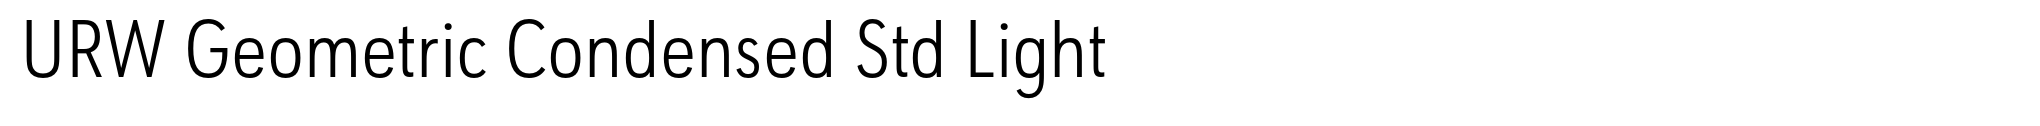 URW Geometric Condensed Std Light image